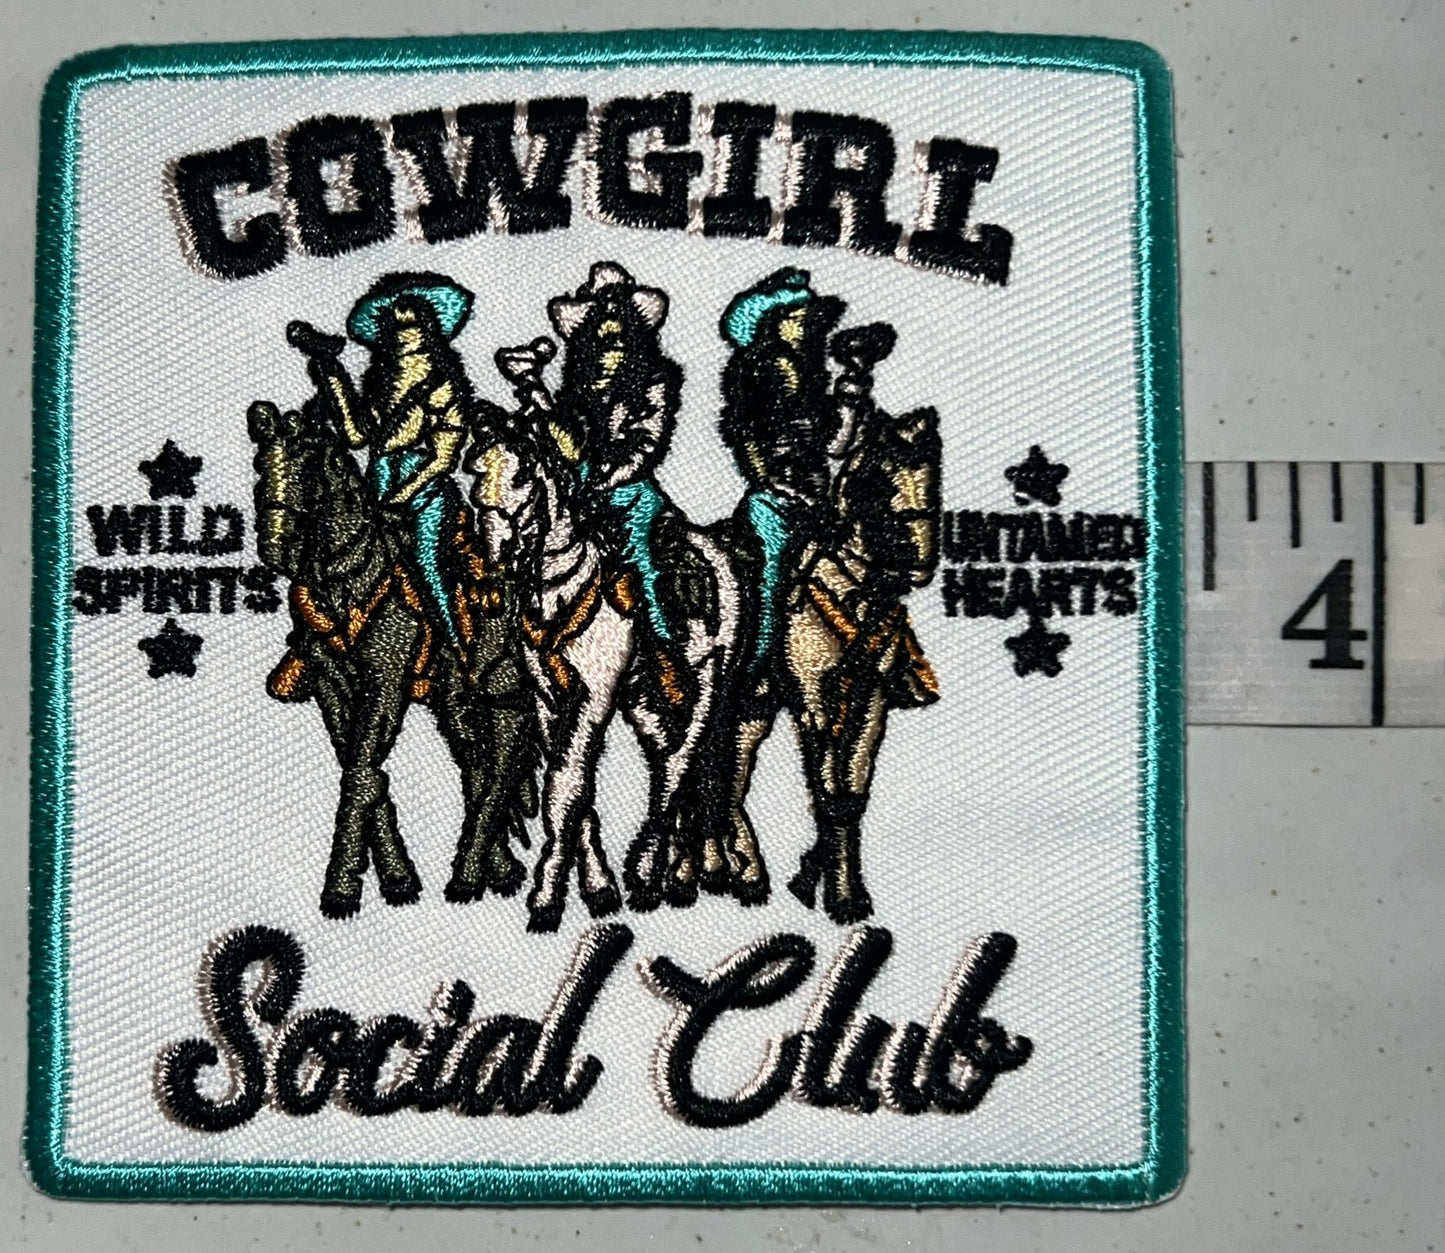 Cow girl Social Club